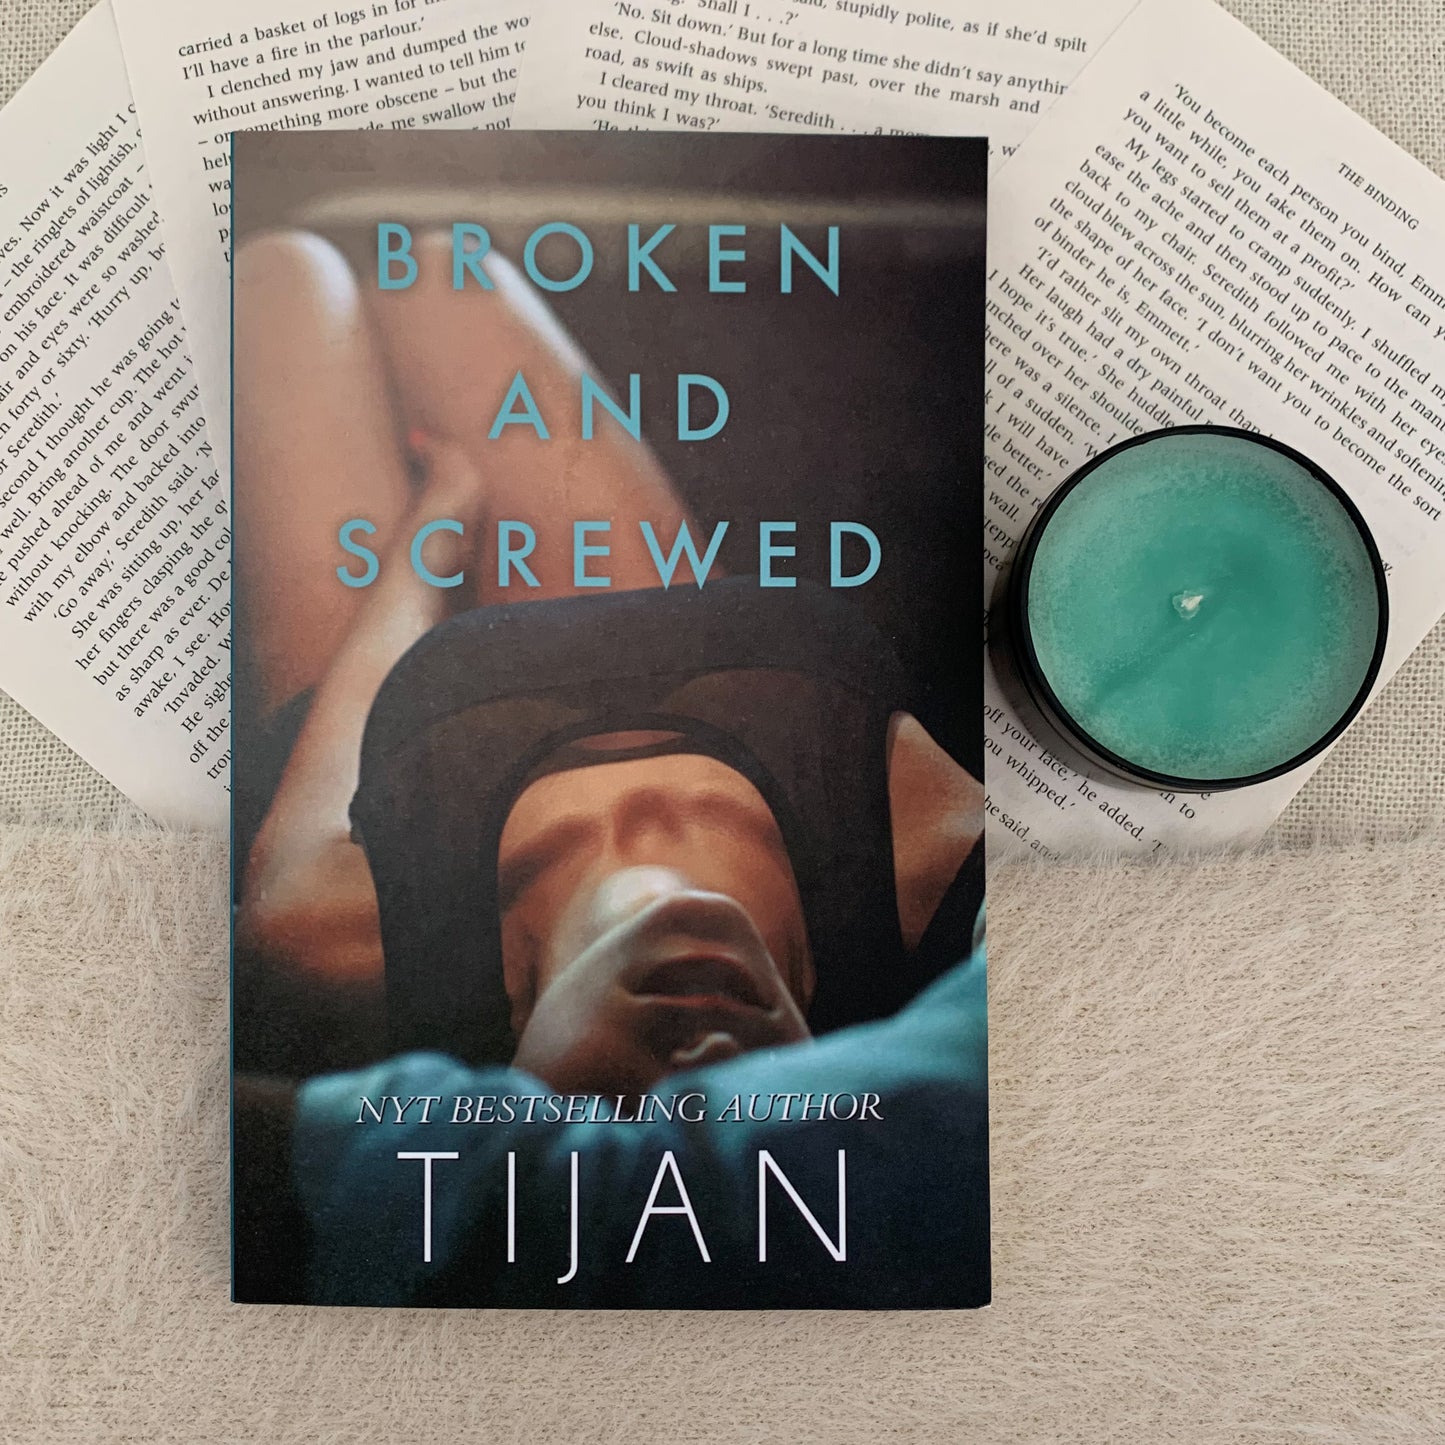 Broken & Screwed duology by Tijan